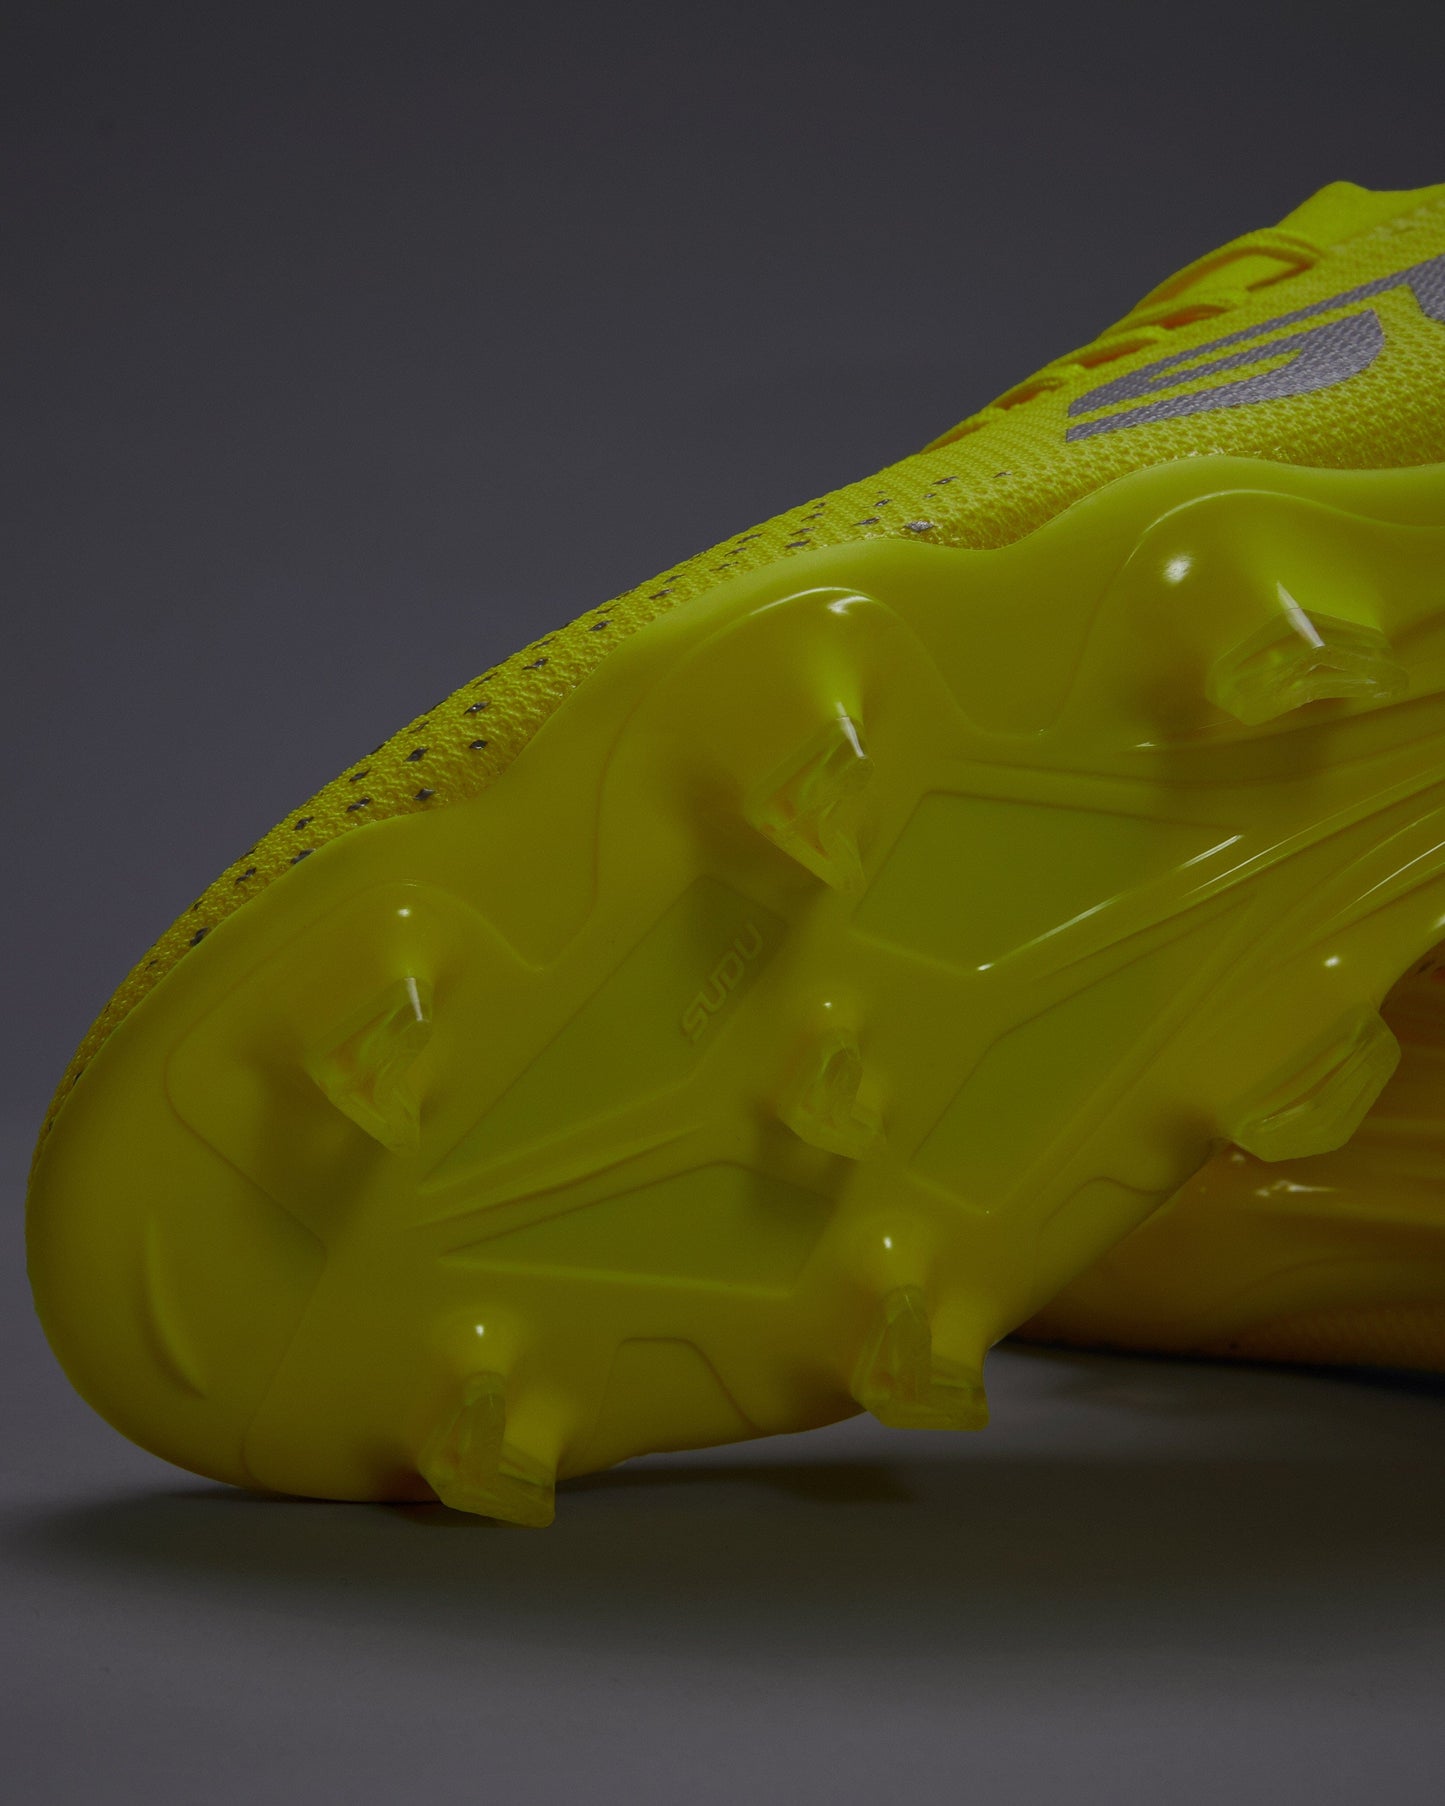 SUDU SFS FG 01 Football boots - Yellow Football Boots